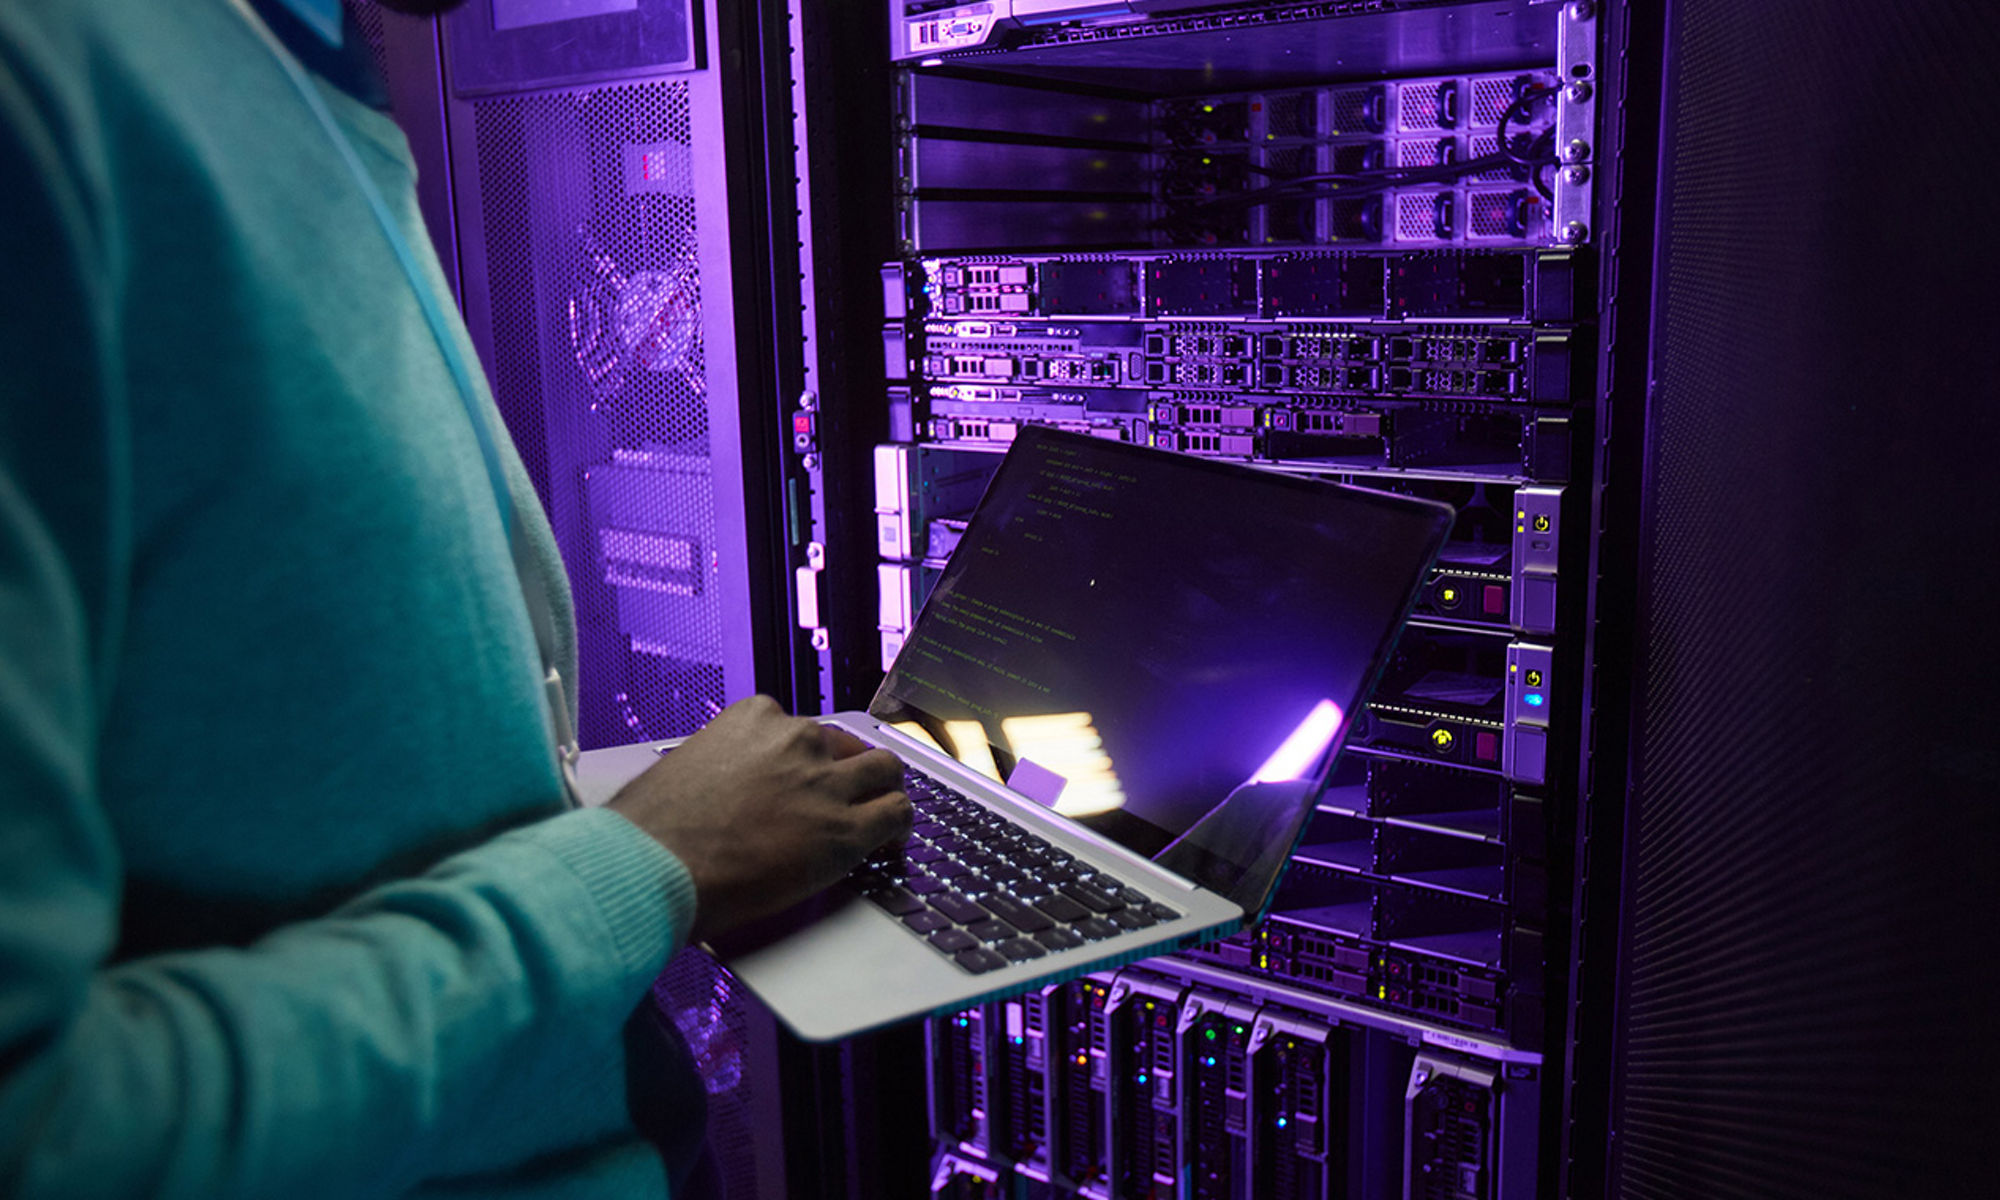 A technician using laptop standing at a server